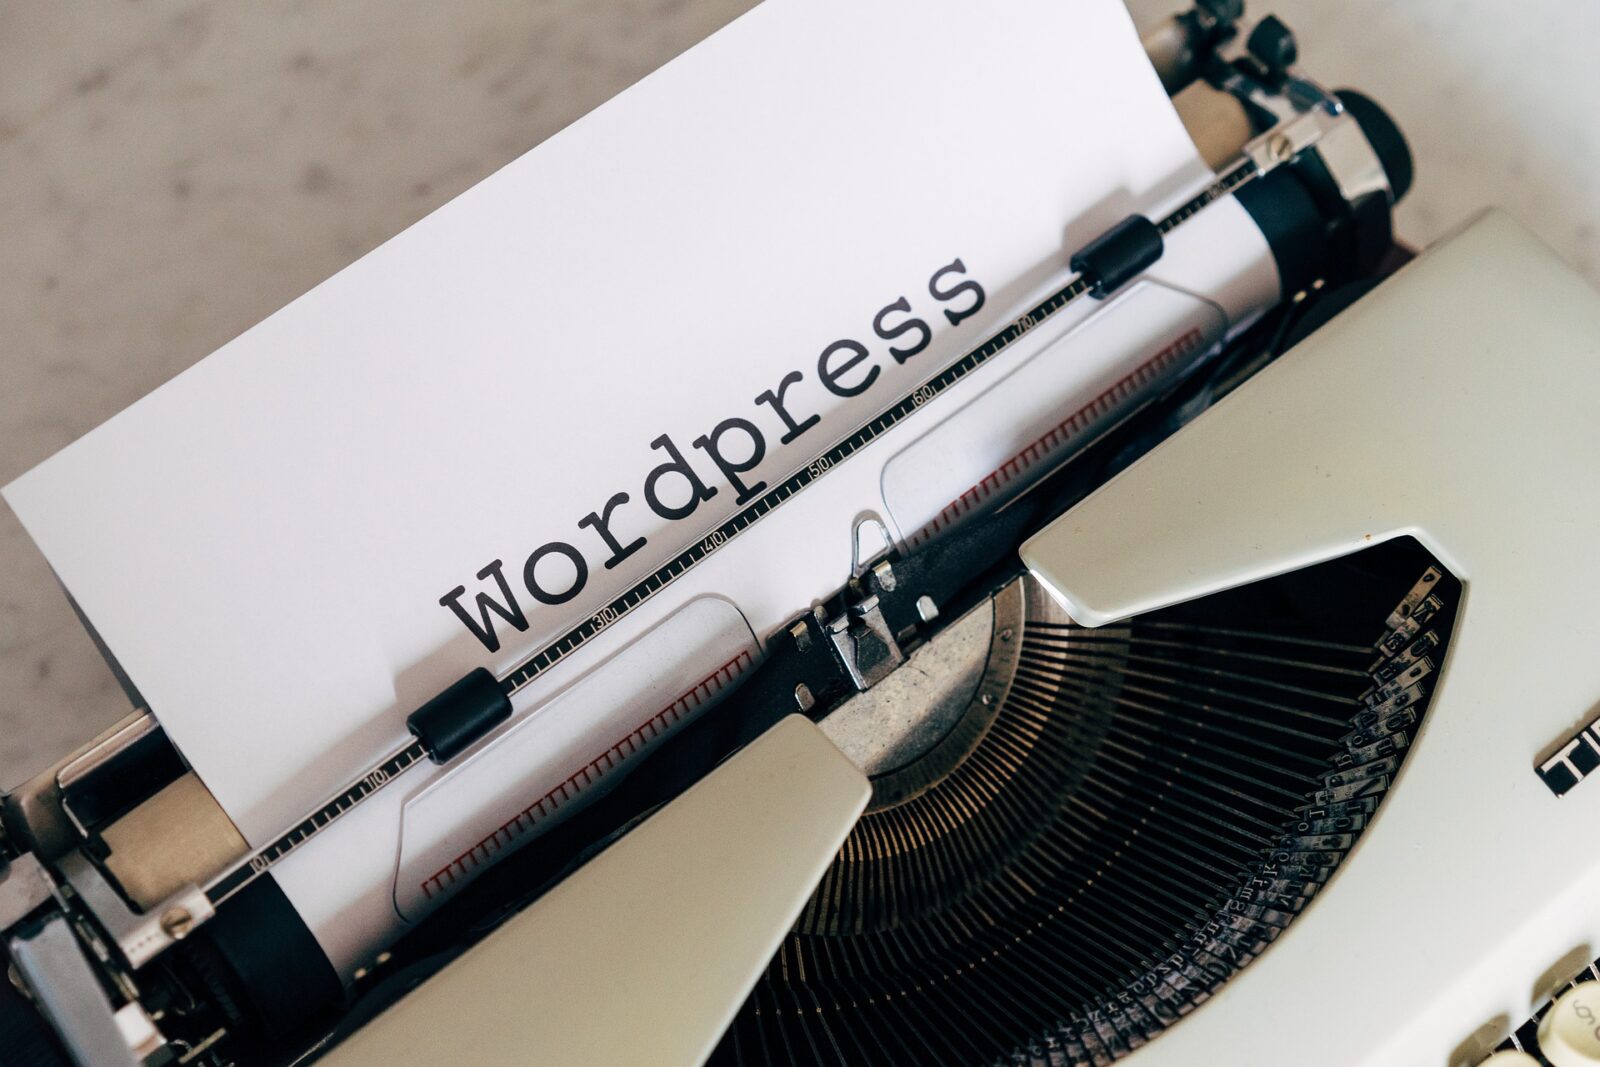 Wordpress Coaching